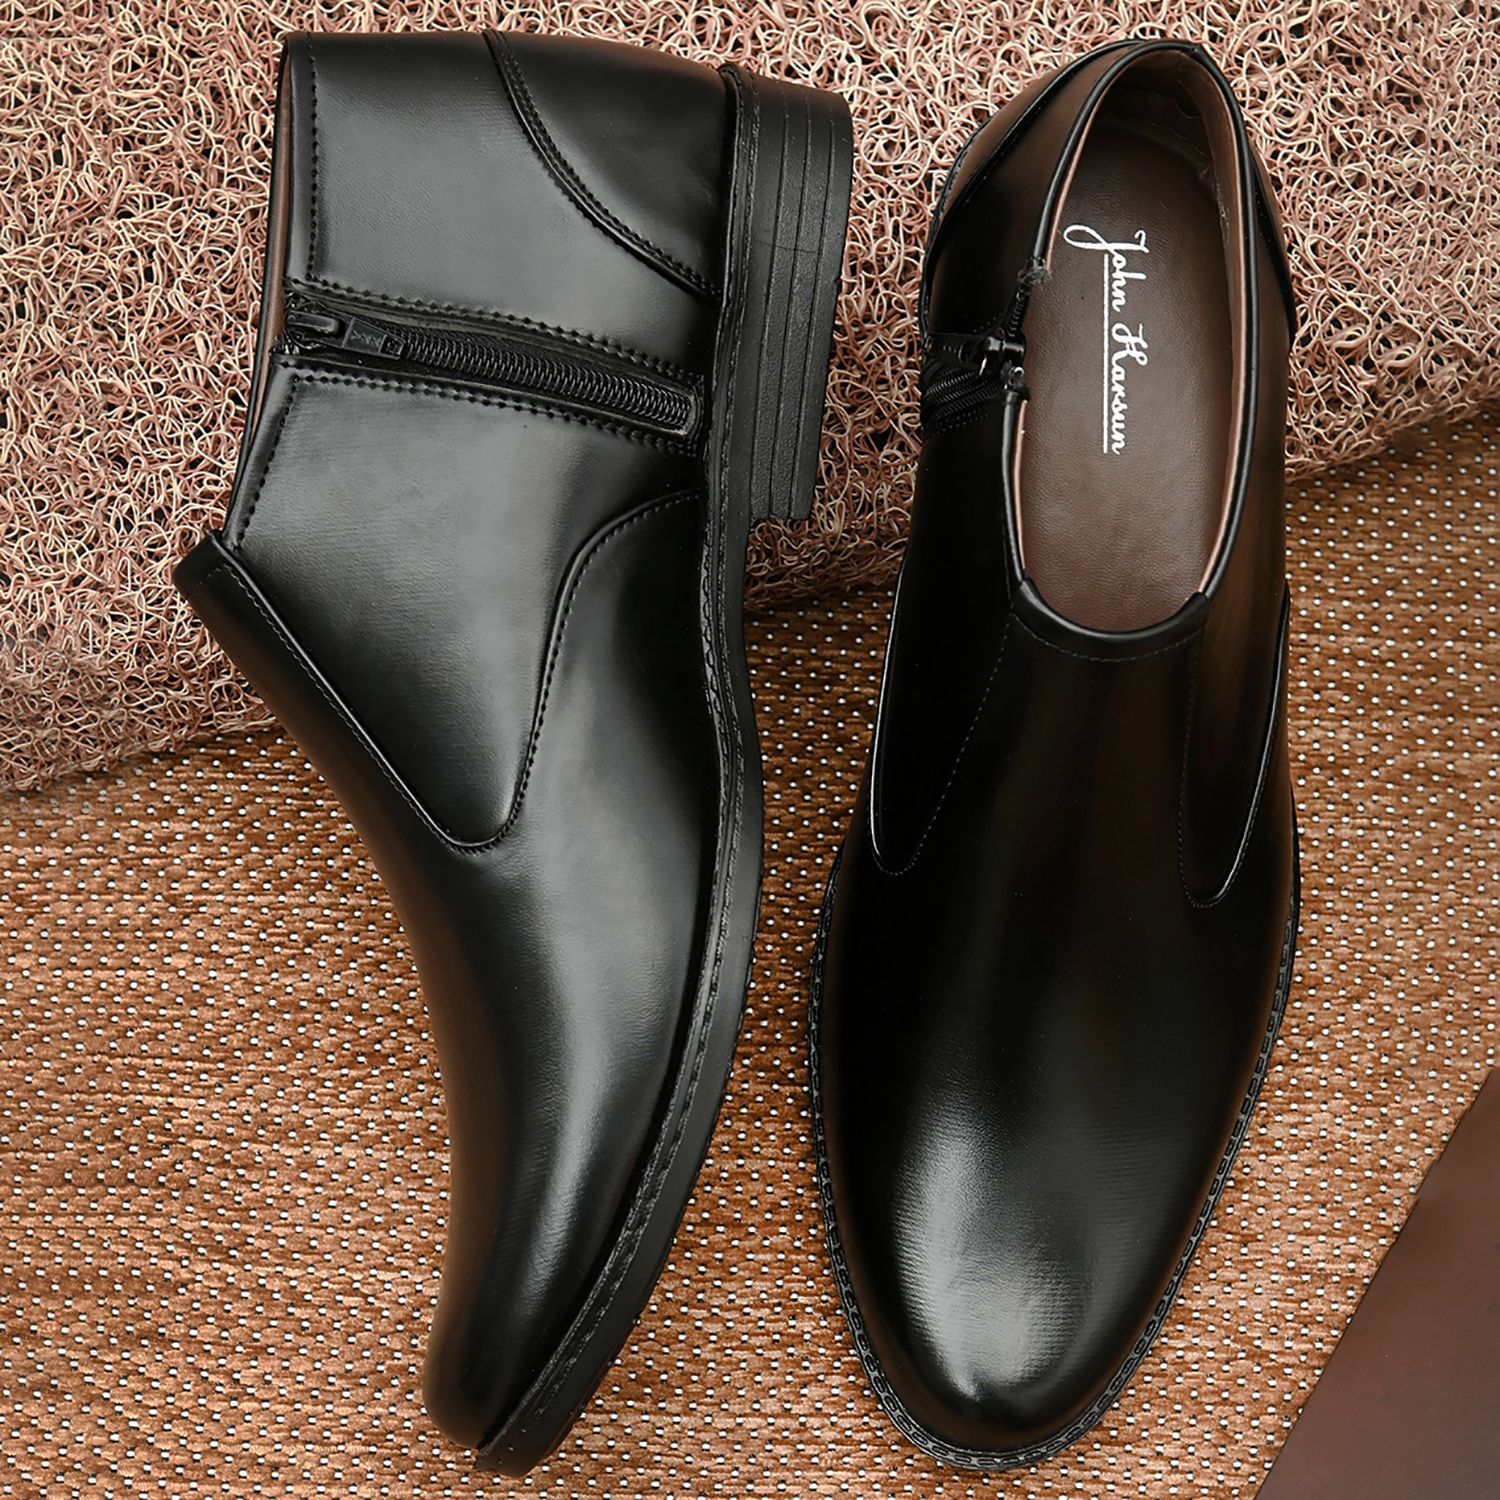     			John Karsun - Black Men's Formal Boots